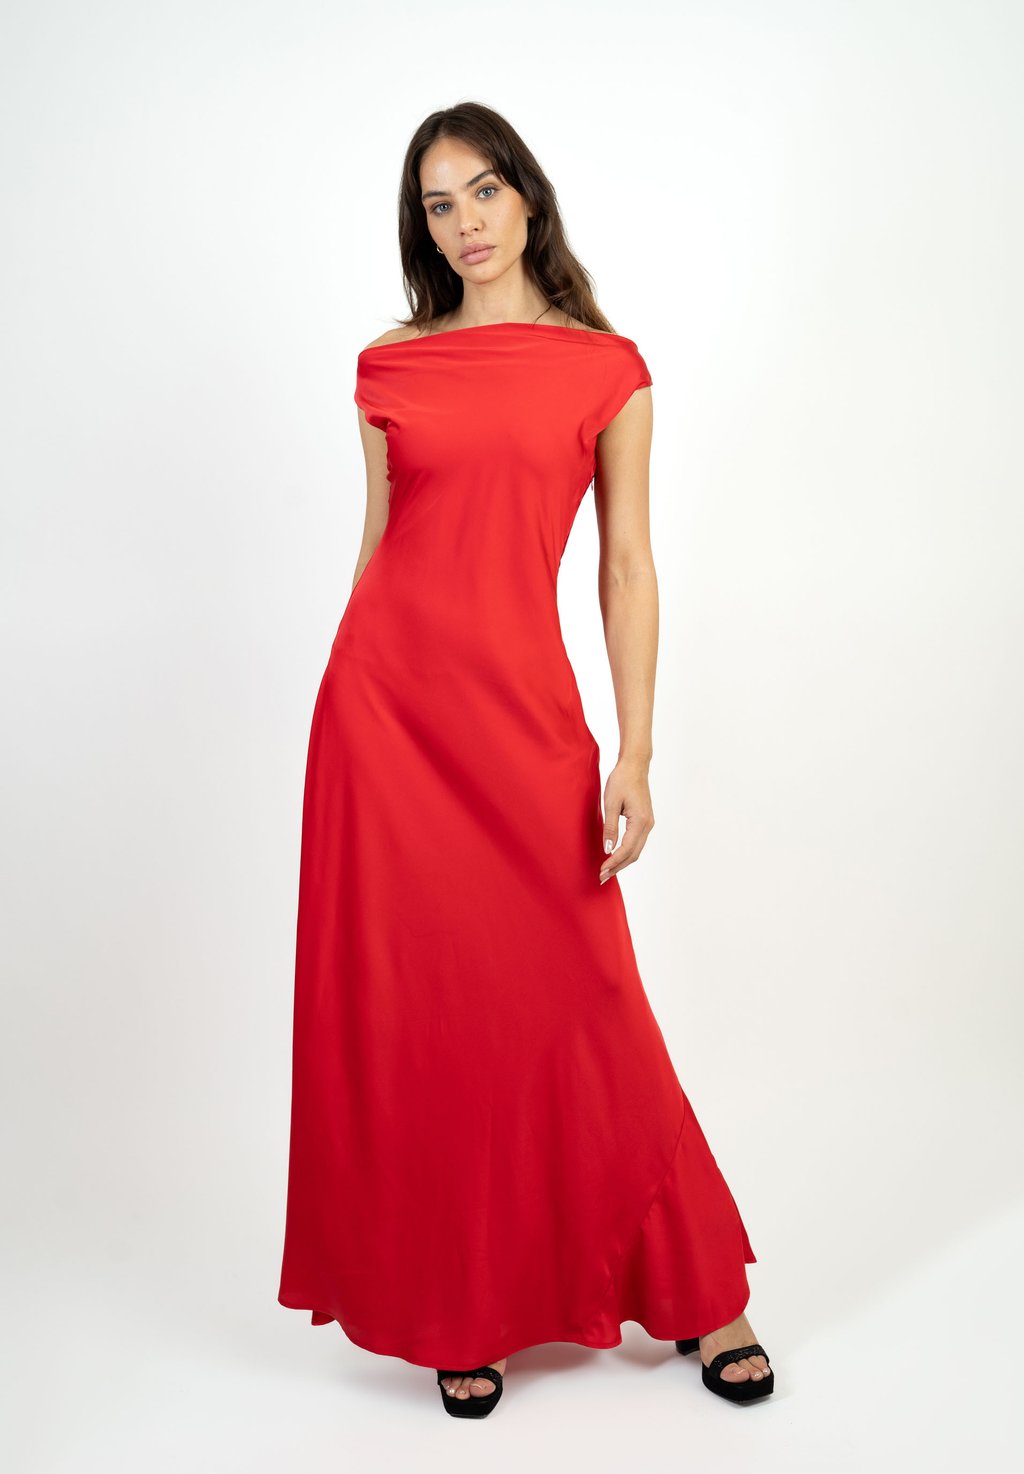 Платье макси MARLOUK TFNC, цвет red